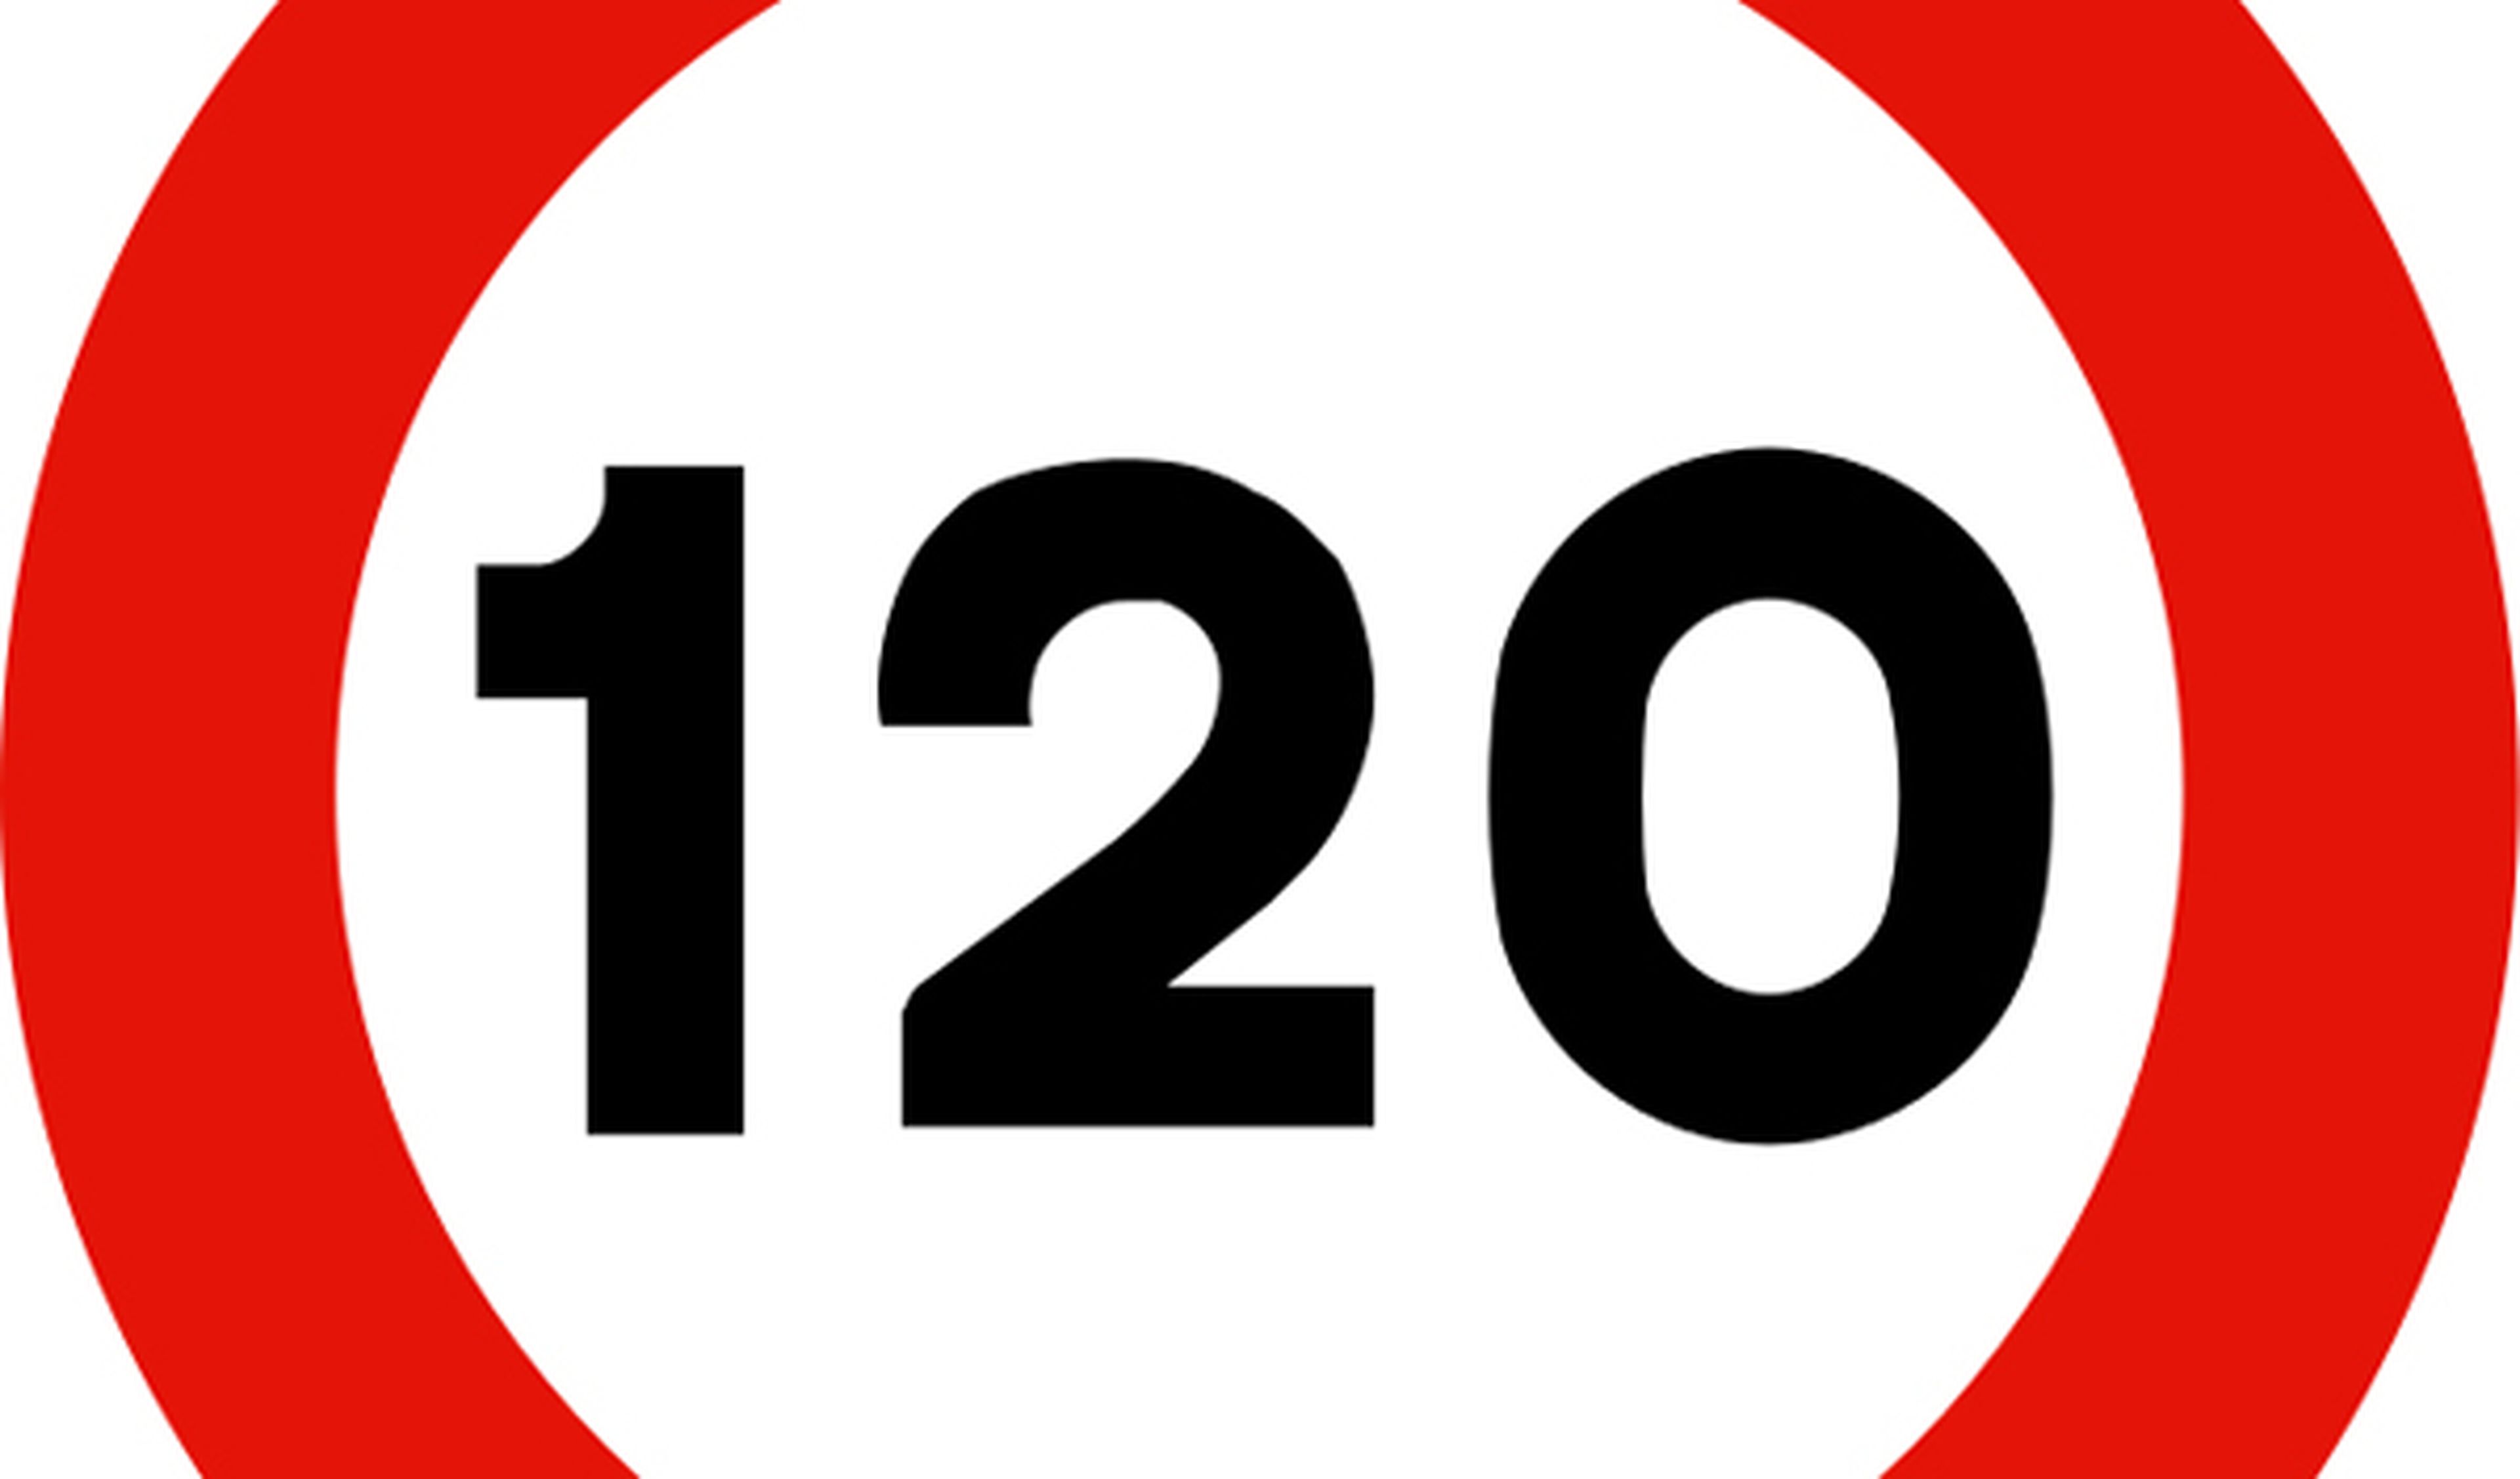 Si suben a 130 km/h, podrás recurrir las multas de 120 km/h